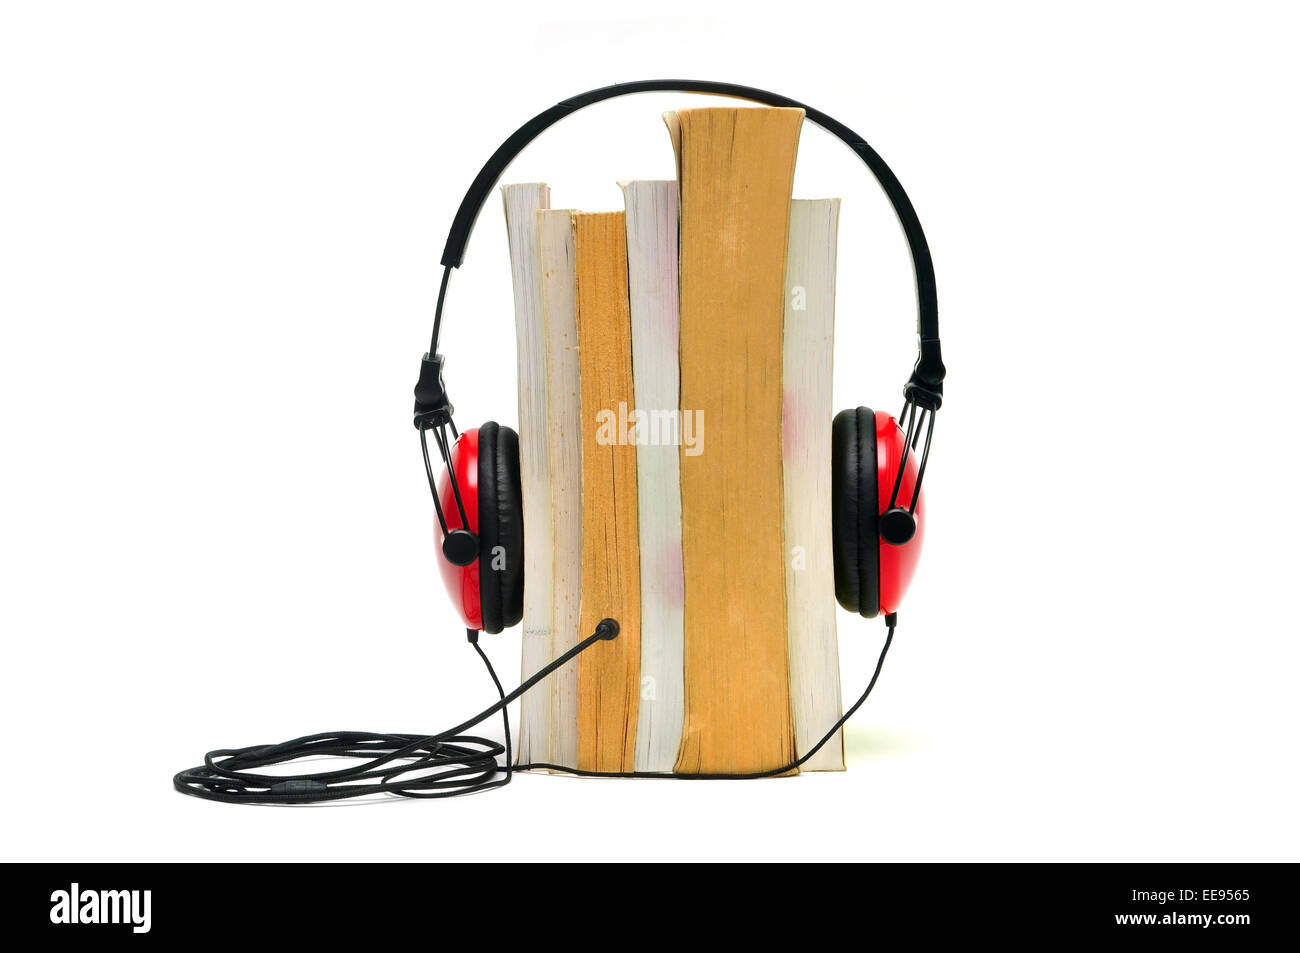 Headphones on books isolated on white representing audiobook concept Stock Photo